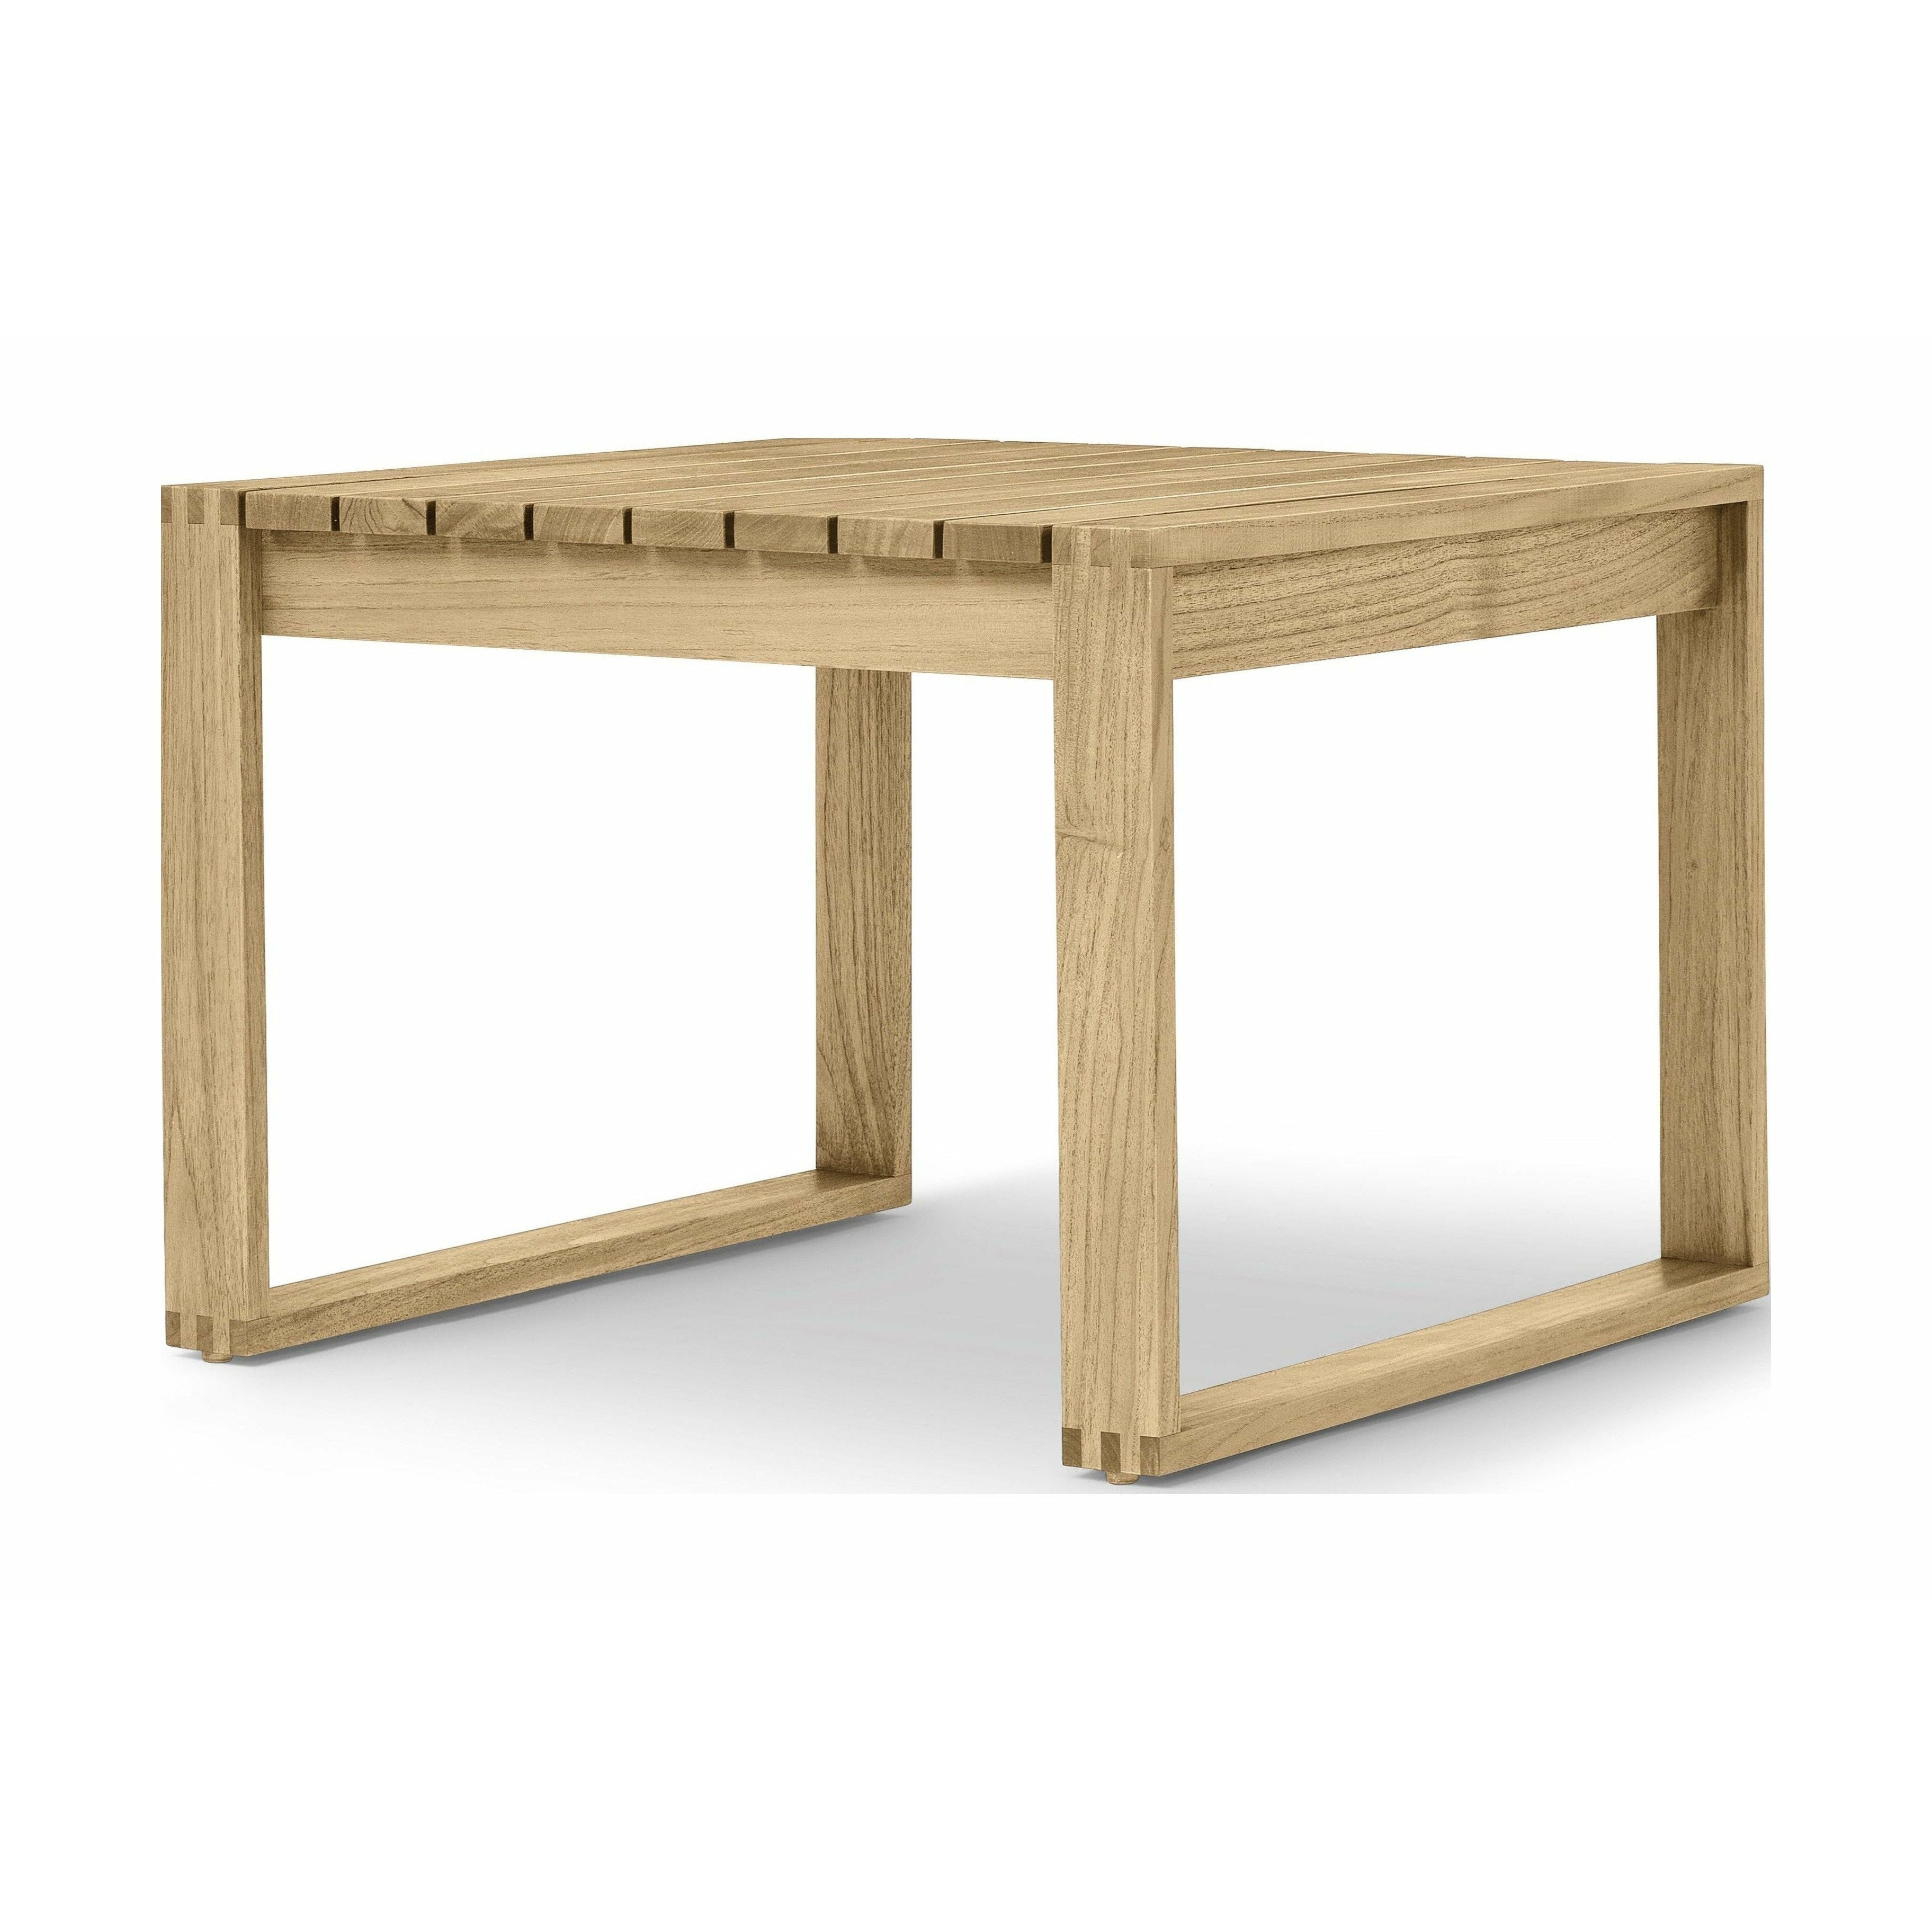 Boční stůl Carl Hansen Bk16 Indoor/Outdoor, neošetřený teak